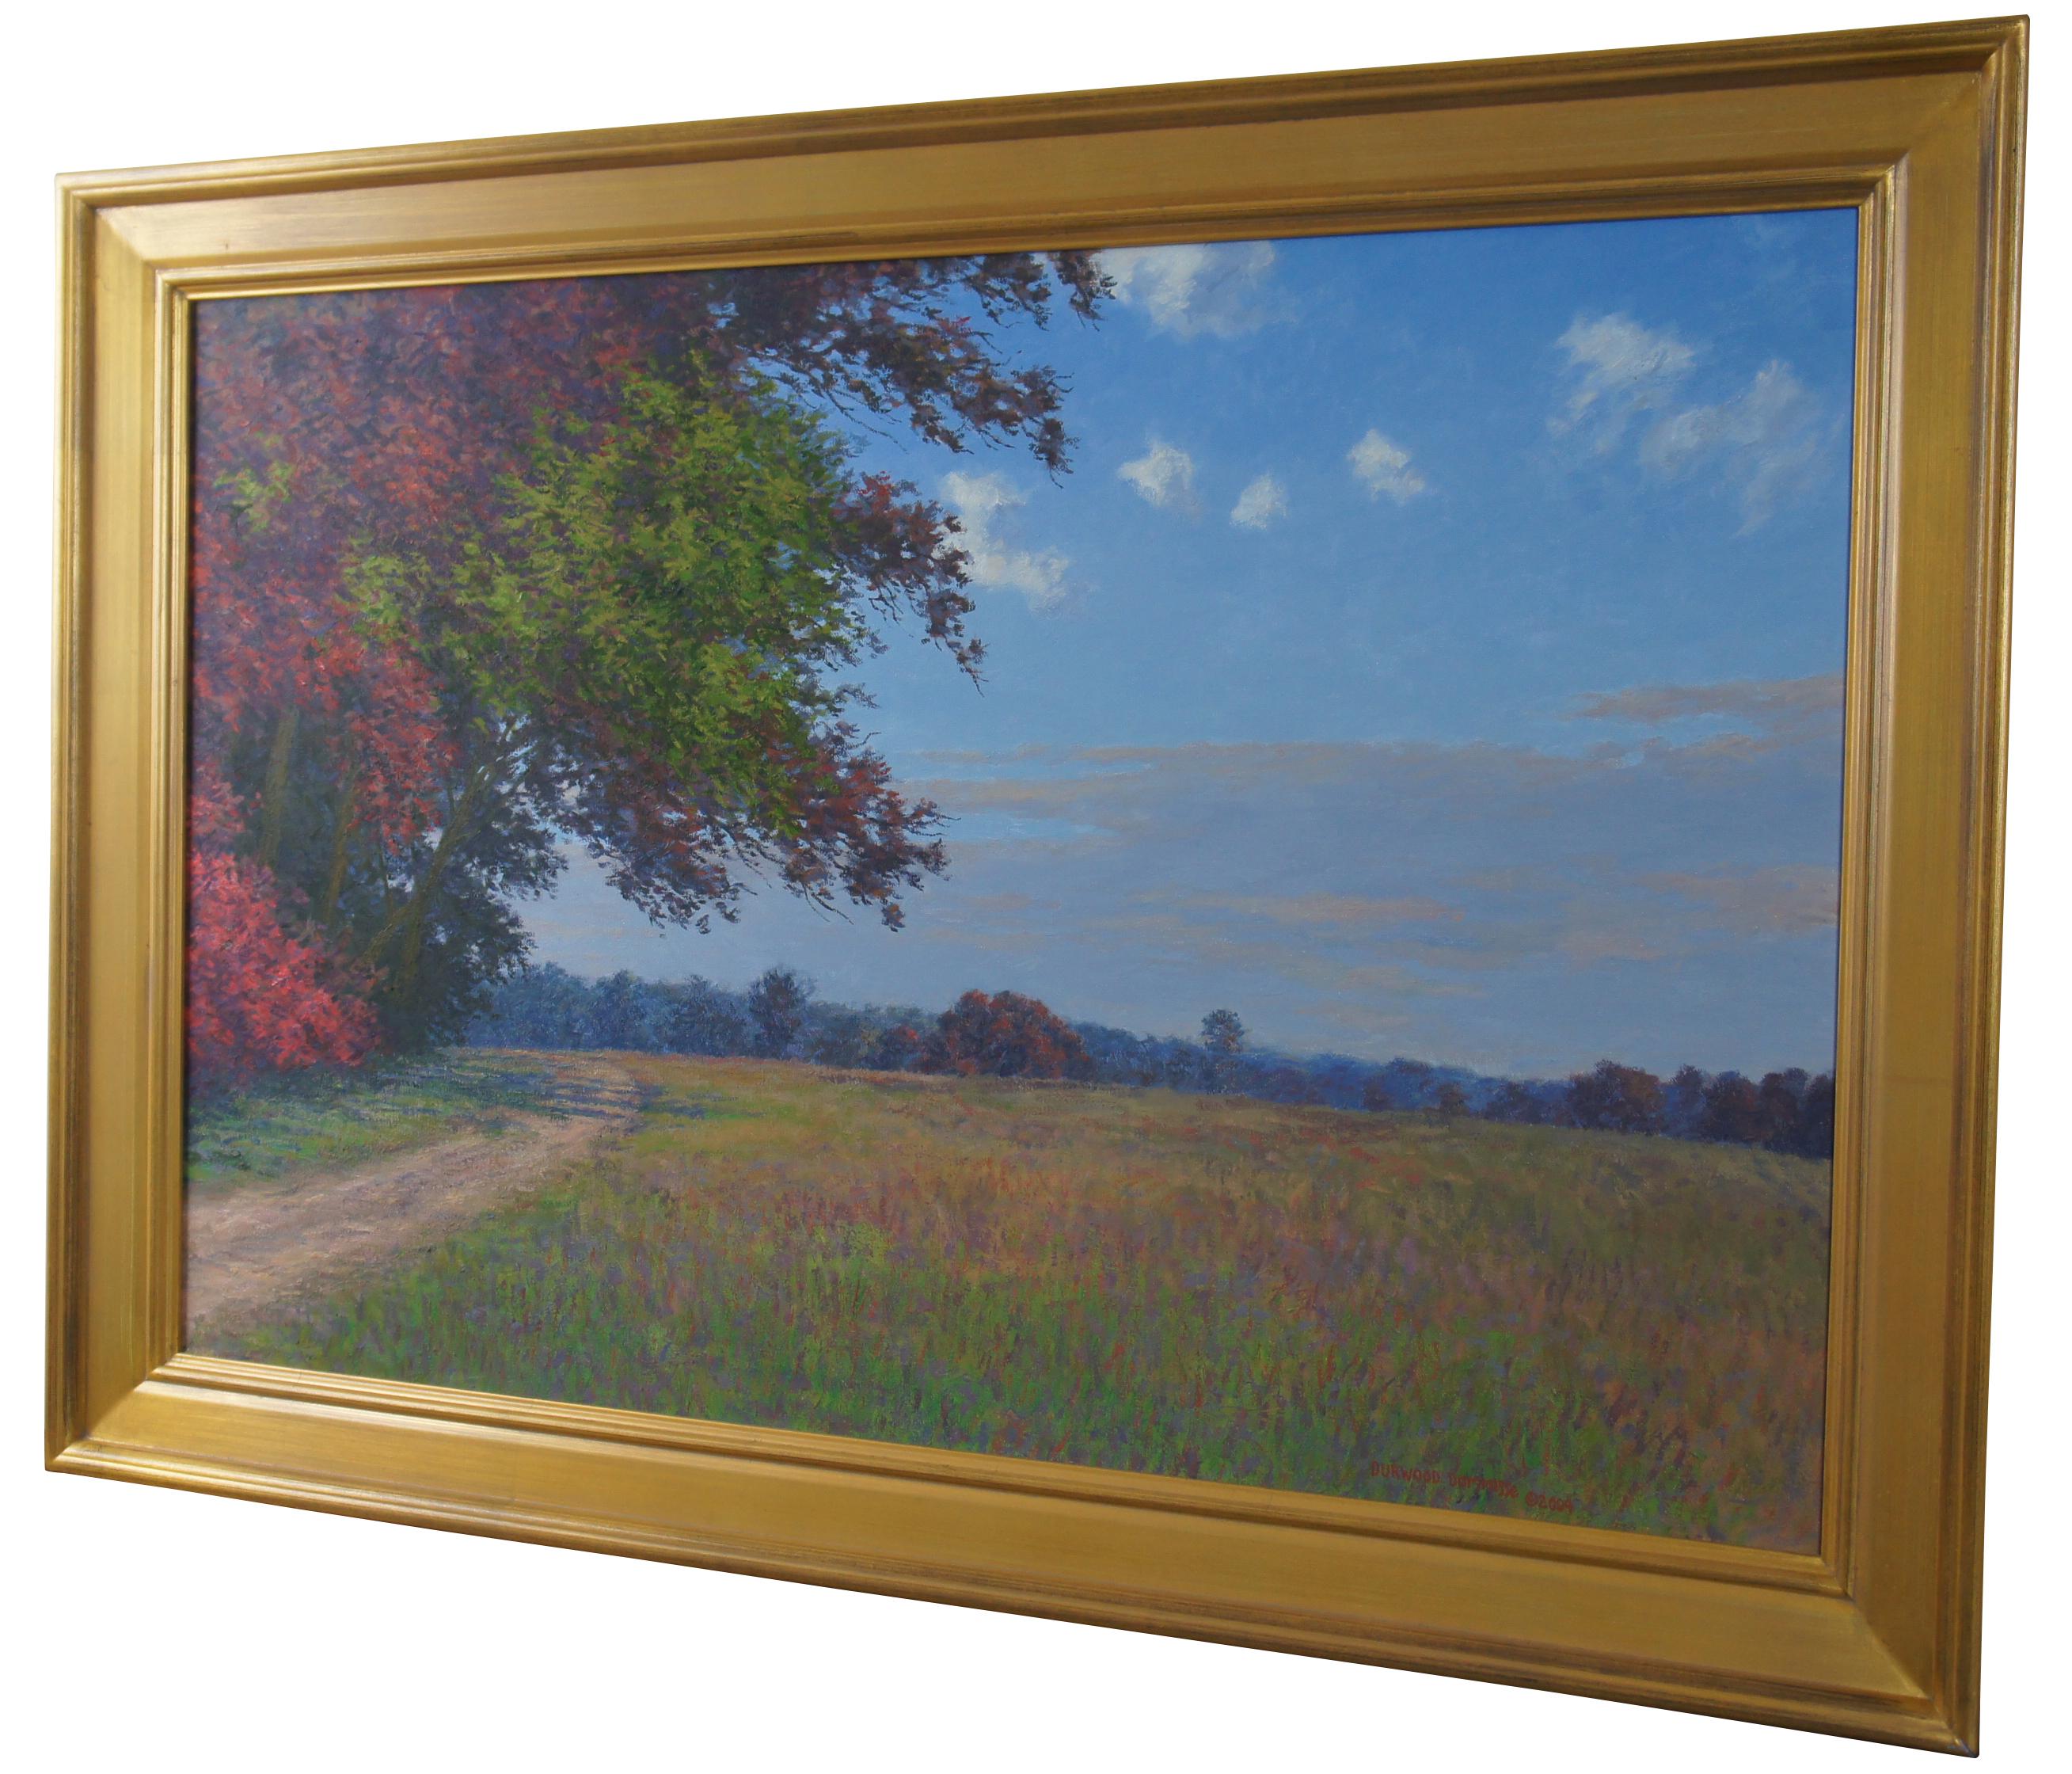 Nearing Bungletown II Durwood Dommisse landscape oil on canvas painting, measures: 41